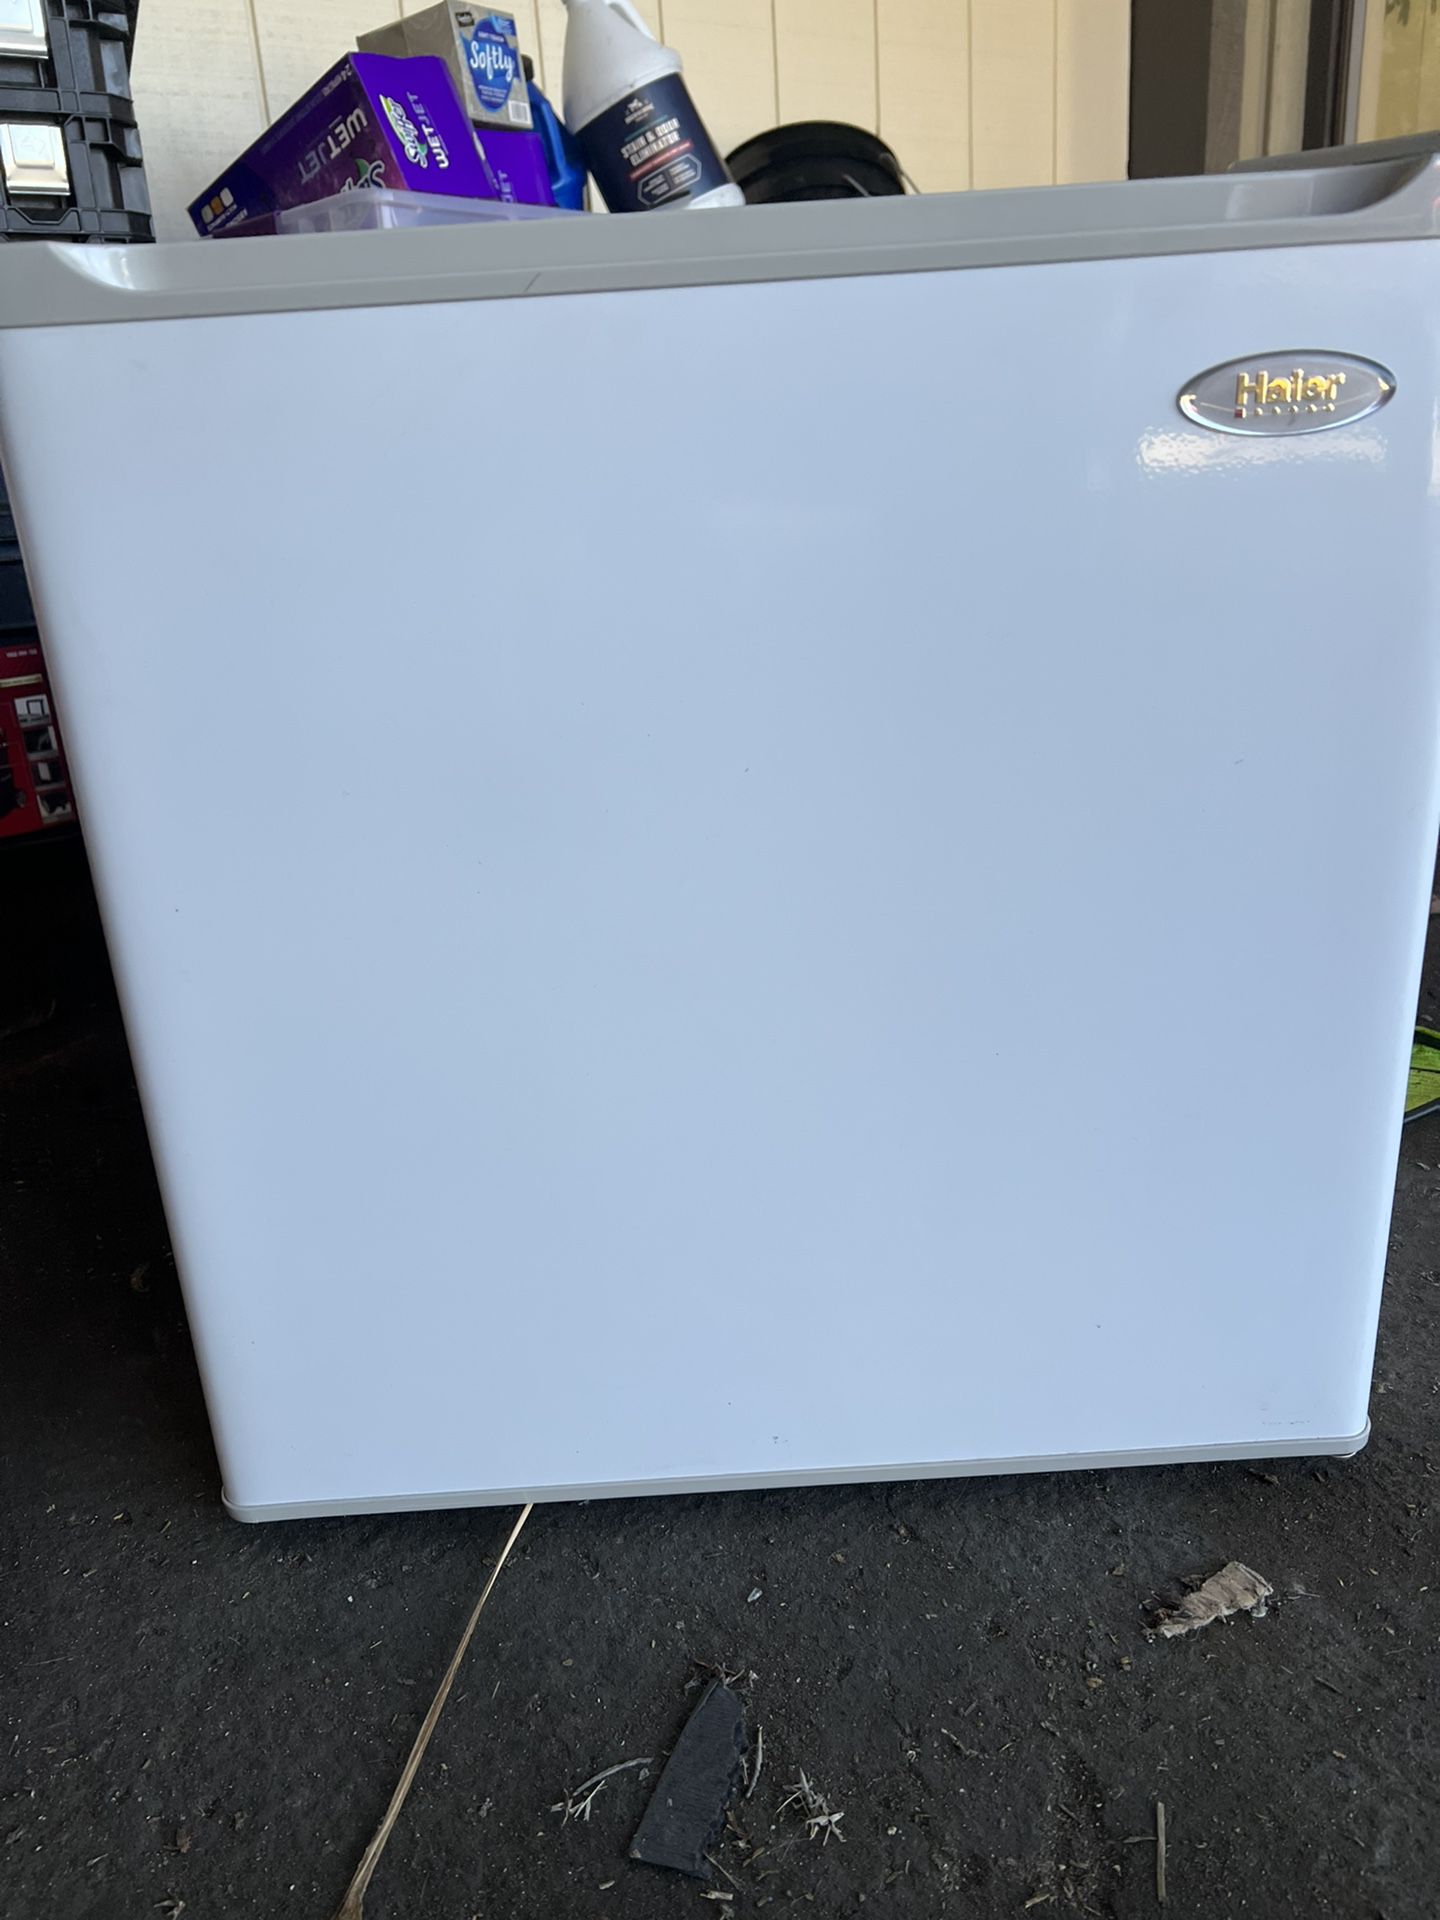 Small Refrigerator / Mini Fridge - $50